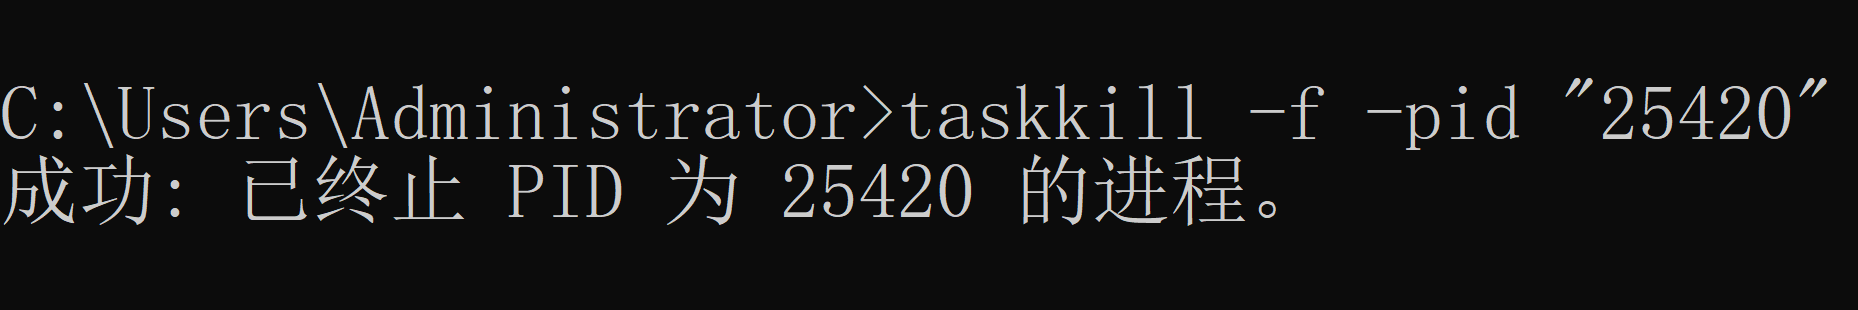 OS_taskkill_f_pid_25420